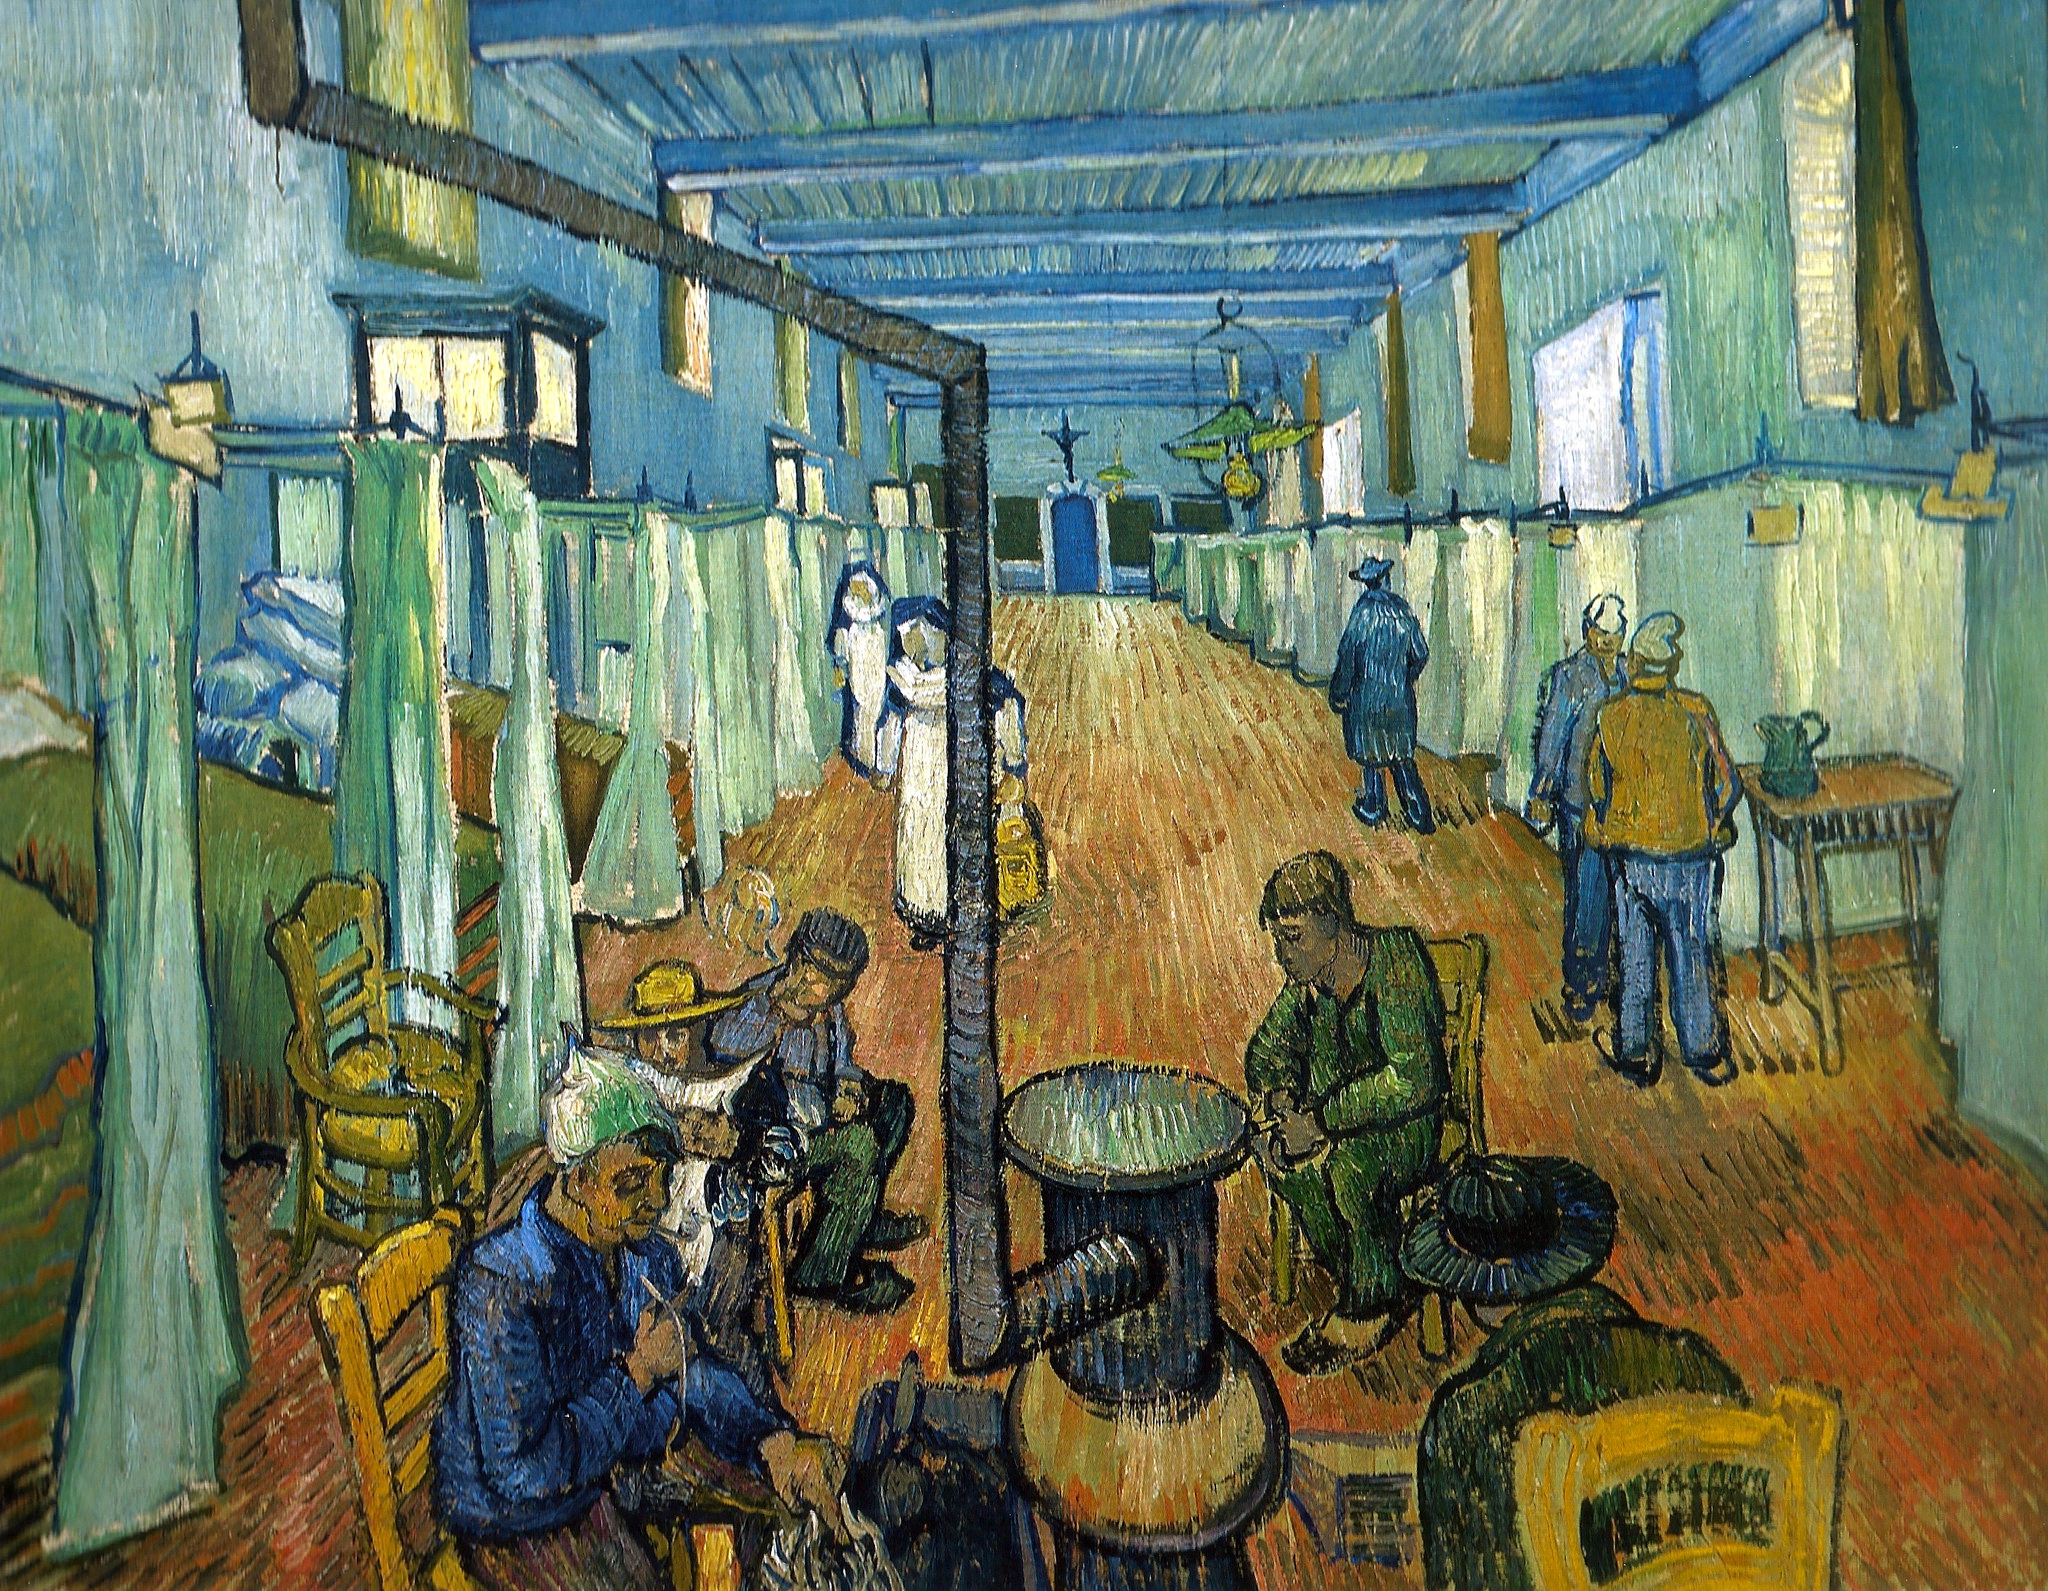 Ward of Arles Hospital by Vincent van Gogh